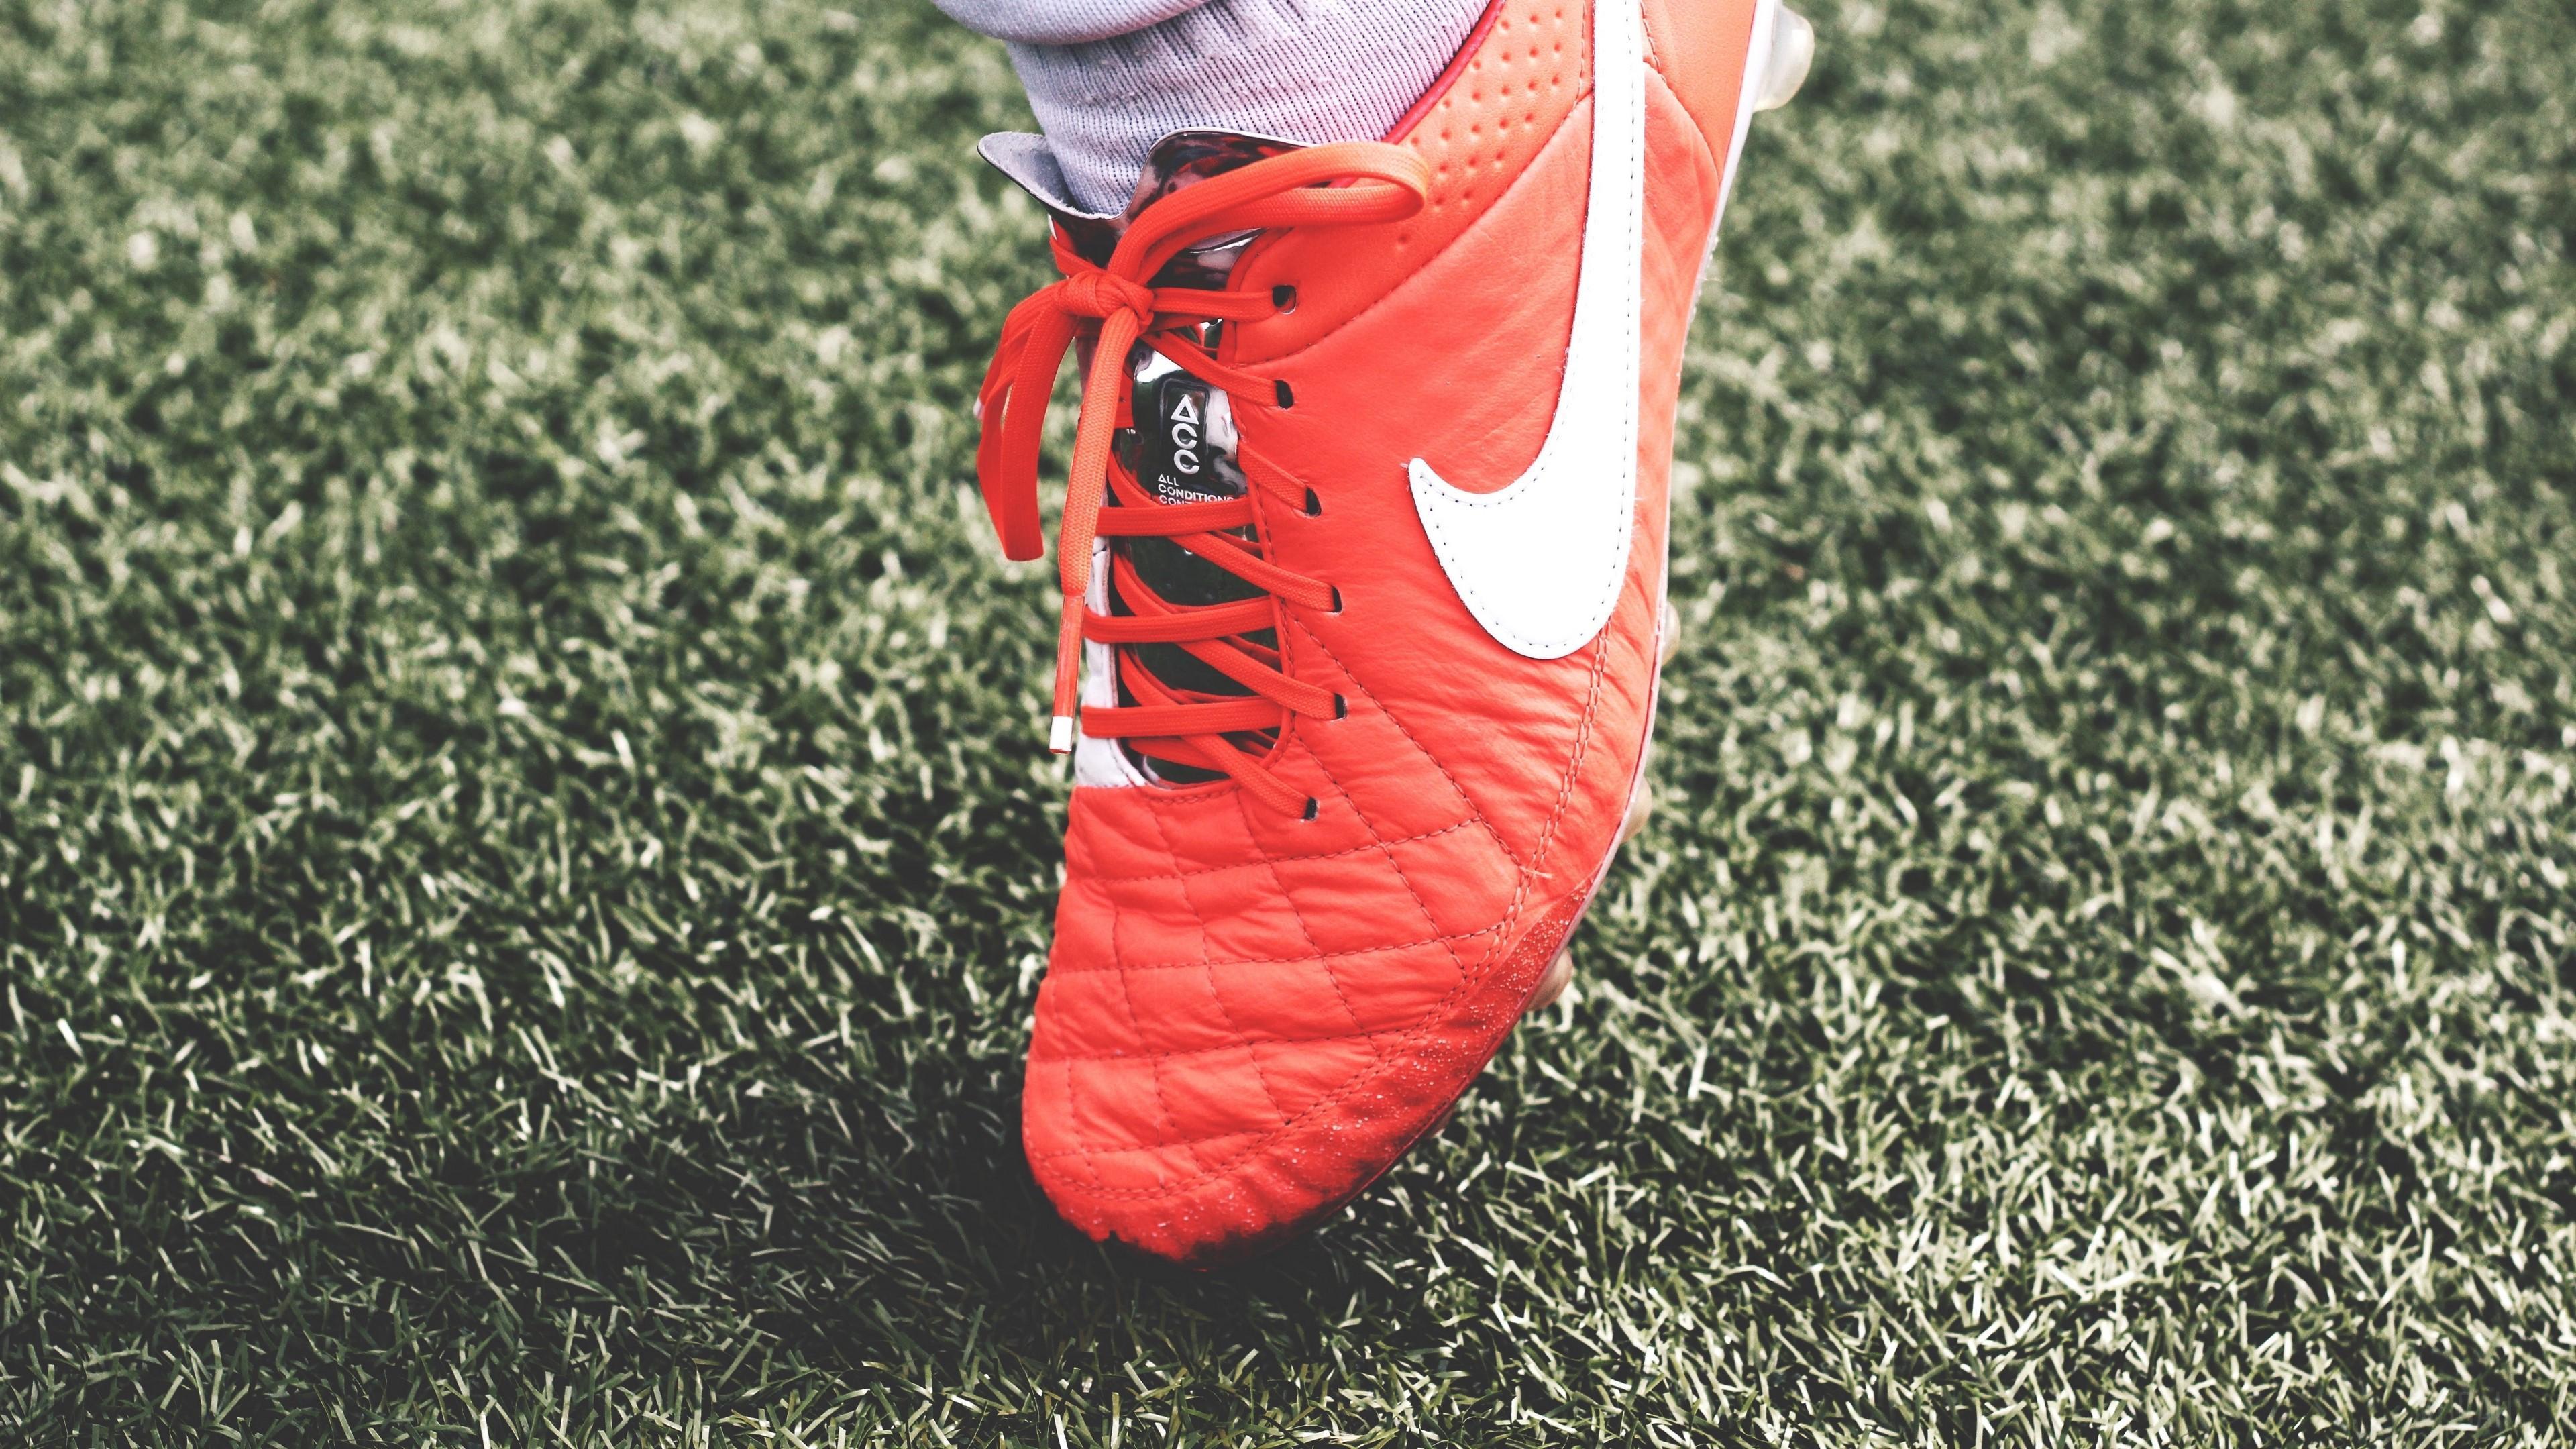 HD wallpaper, Football Shoes, Lawn 4K, Nike